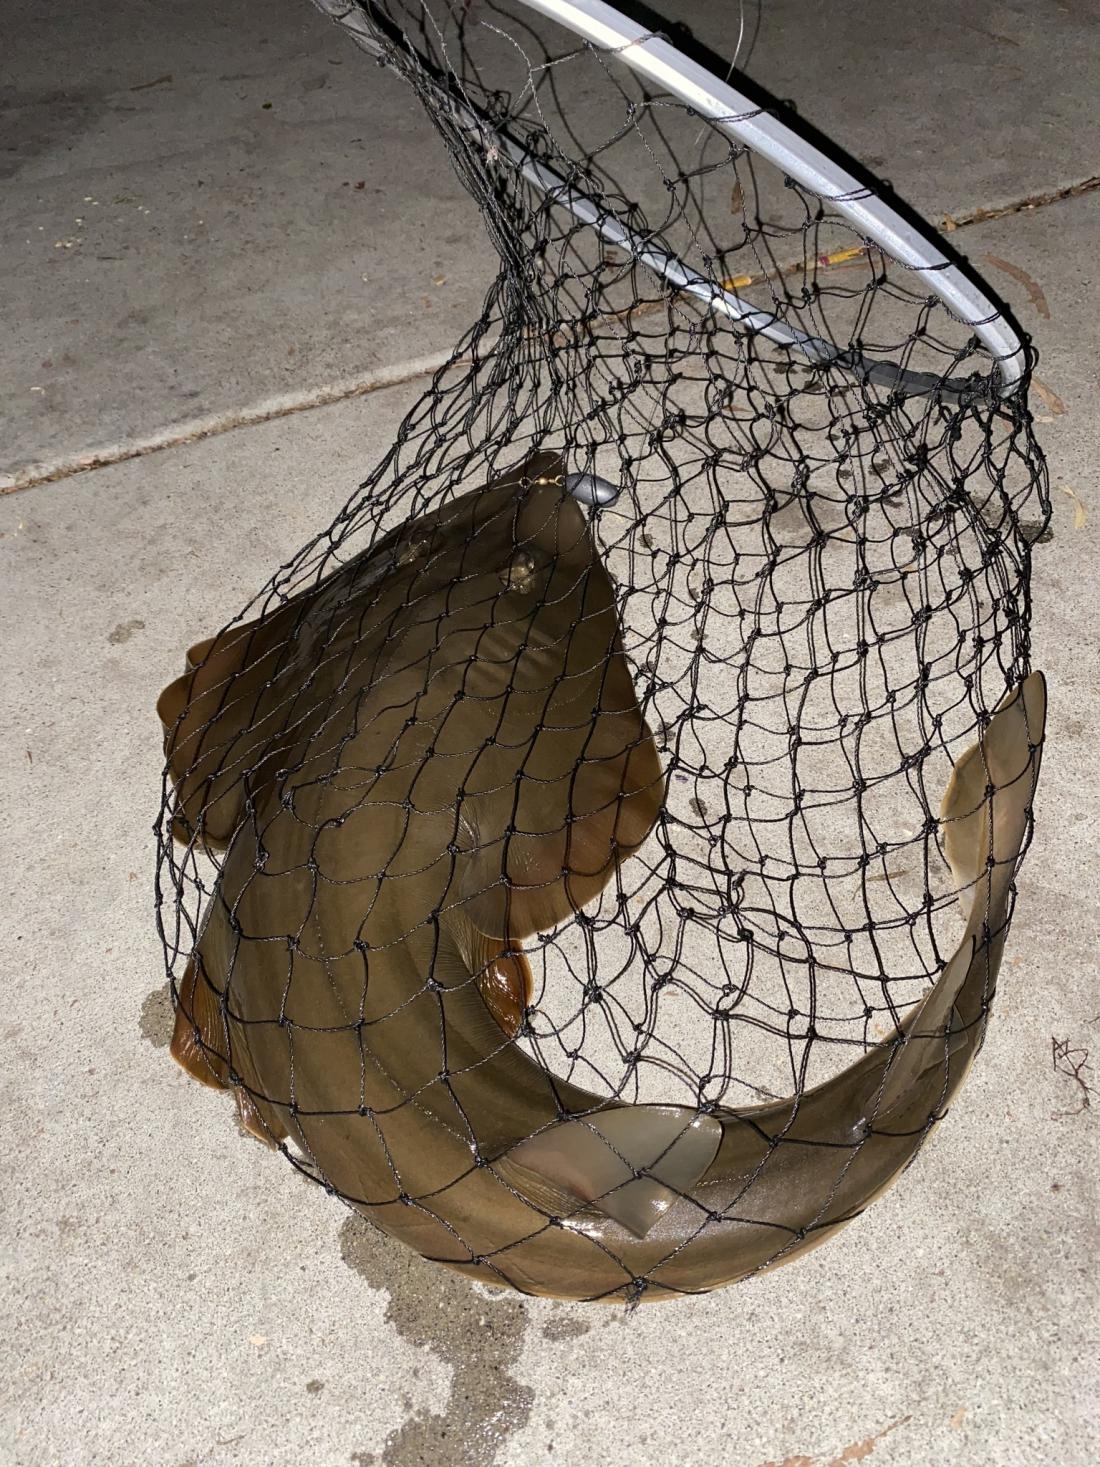 Shovelnose guitarfish in net.